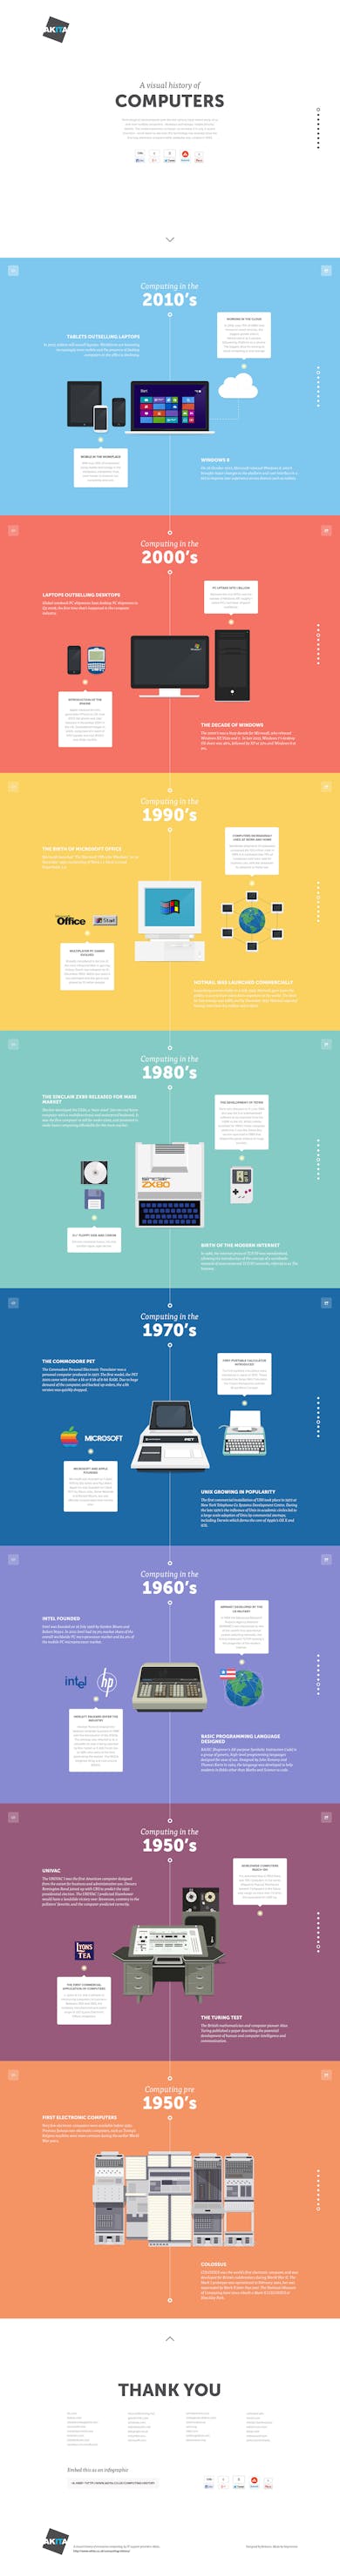 A visual history of computers Thumbnail Preview